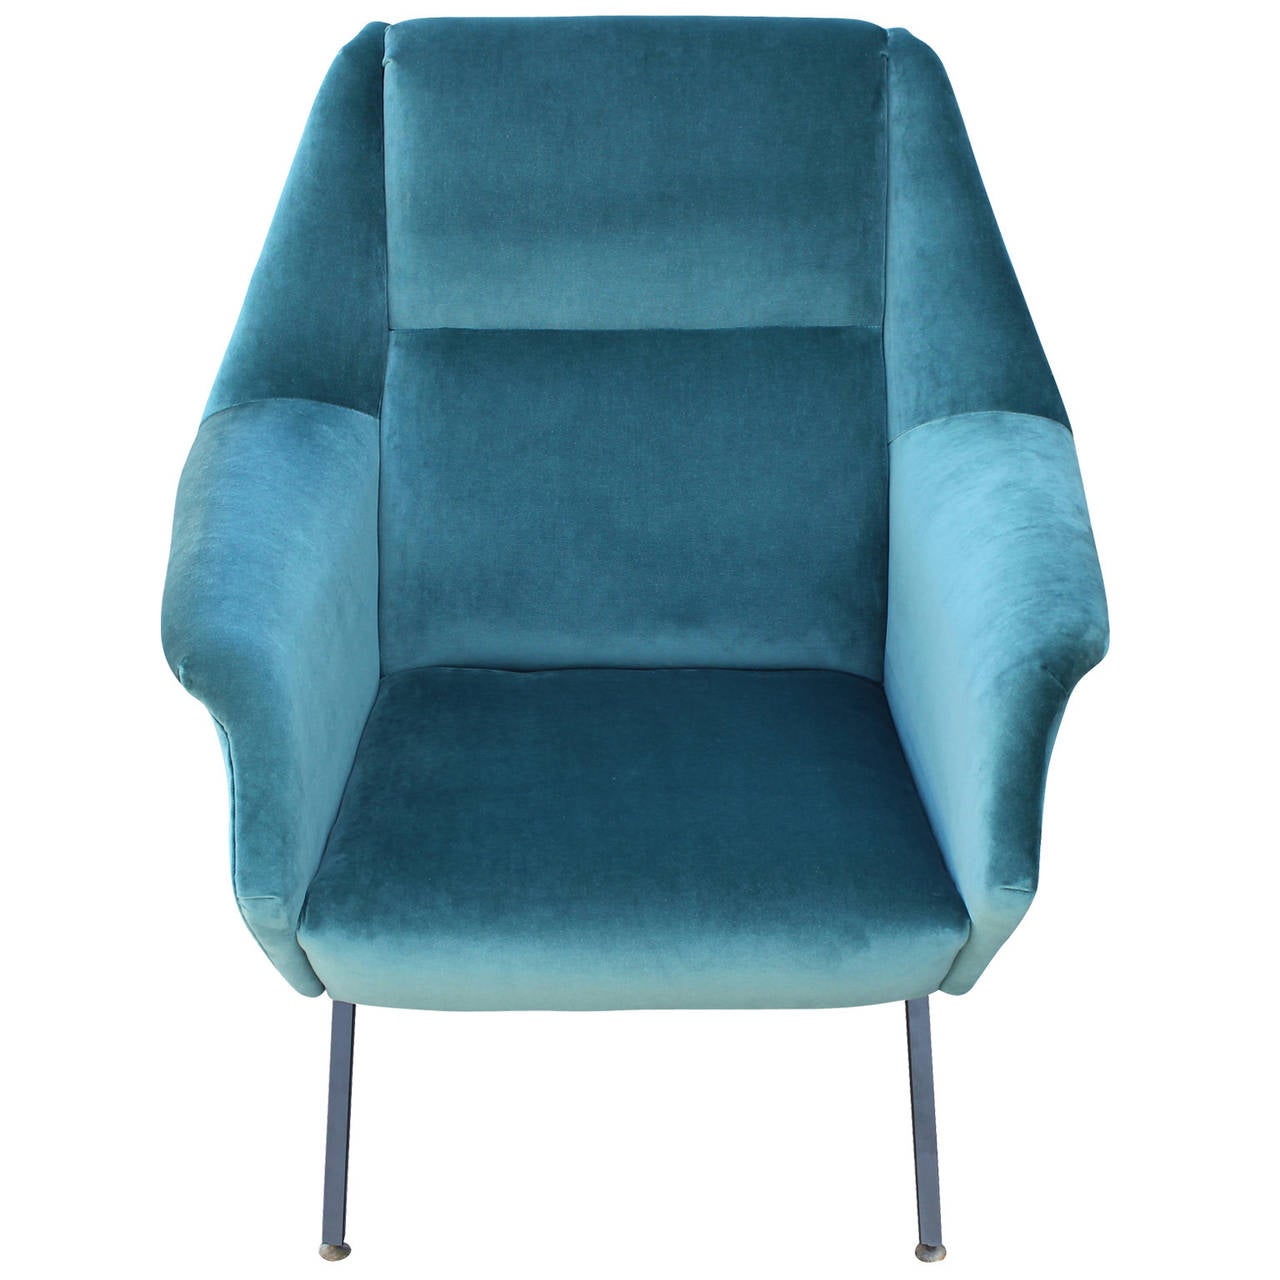 Mid-Century Modern Pair of Fabulous Italian Lounge Chairs in Teal Velvet